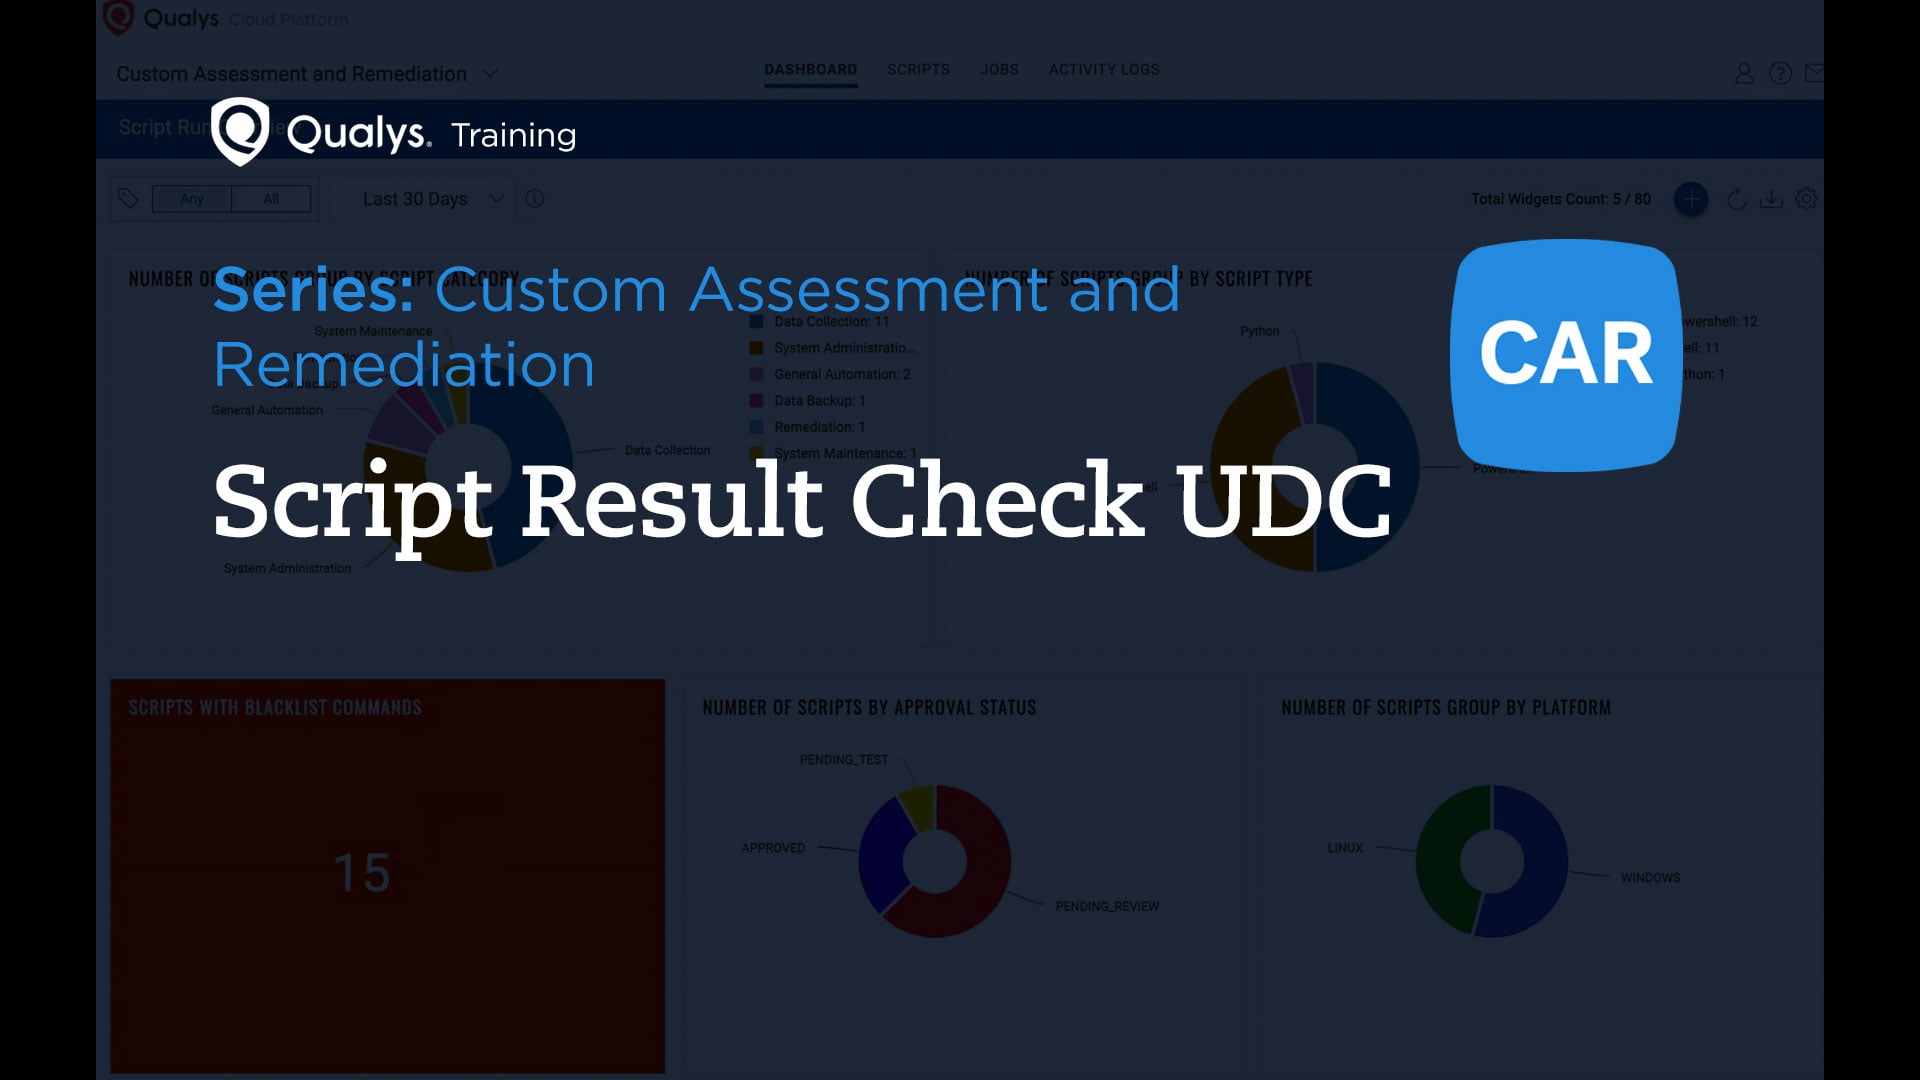 Script Result Check UDC